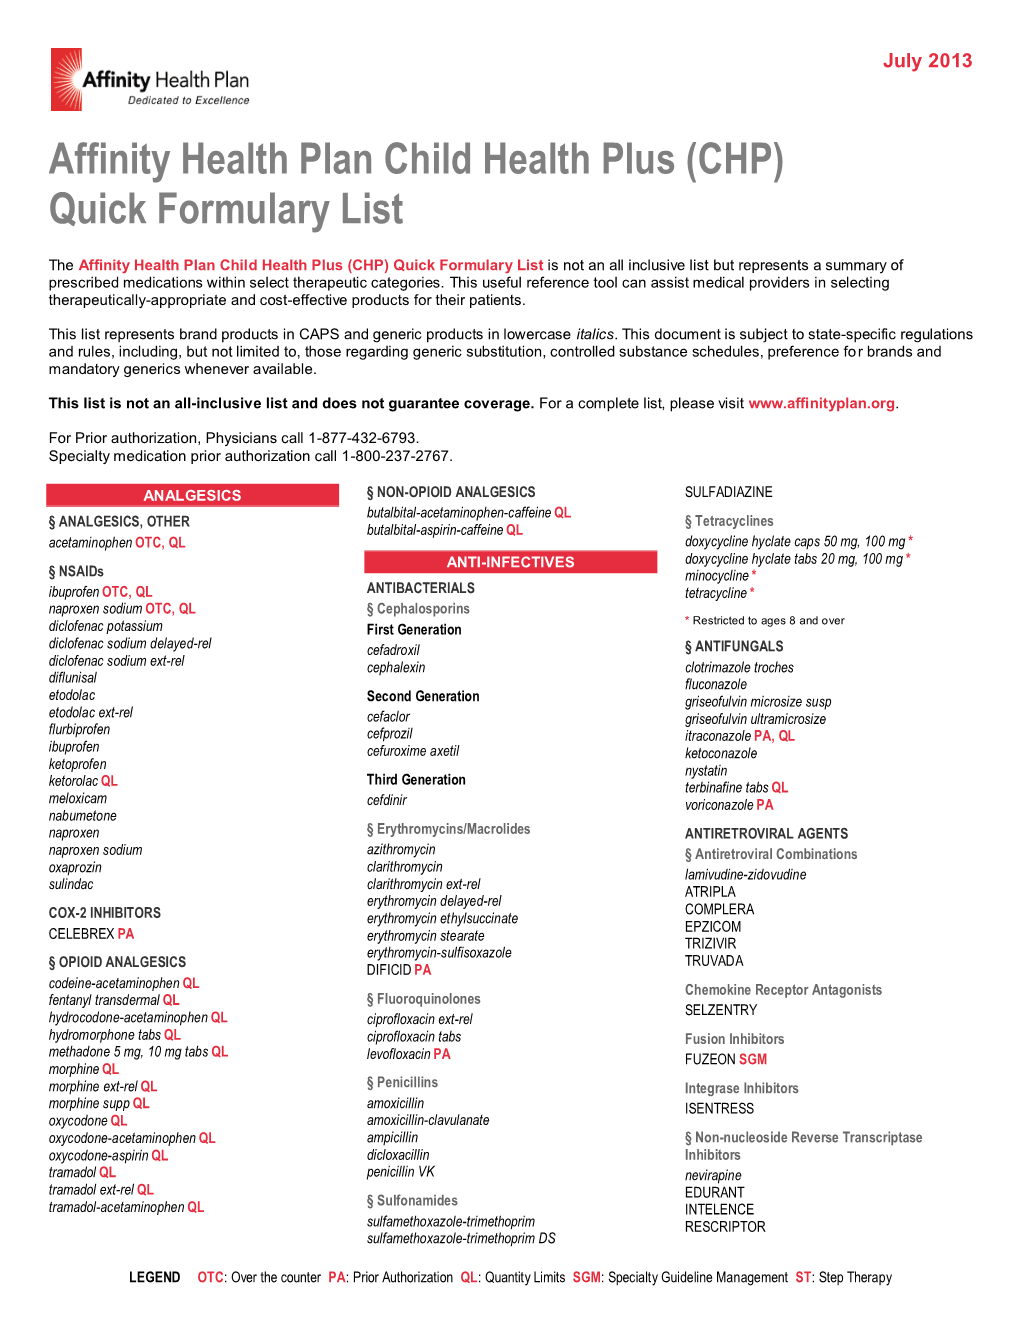 Affinity Health Plan Child Health Plus (CHP) Quick Formulary List